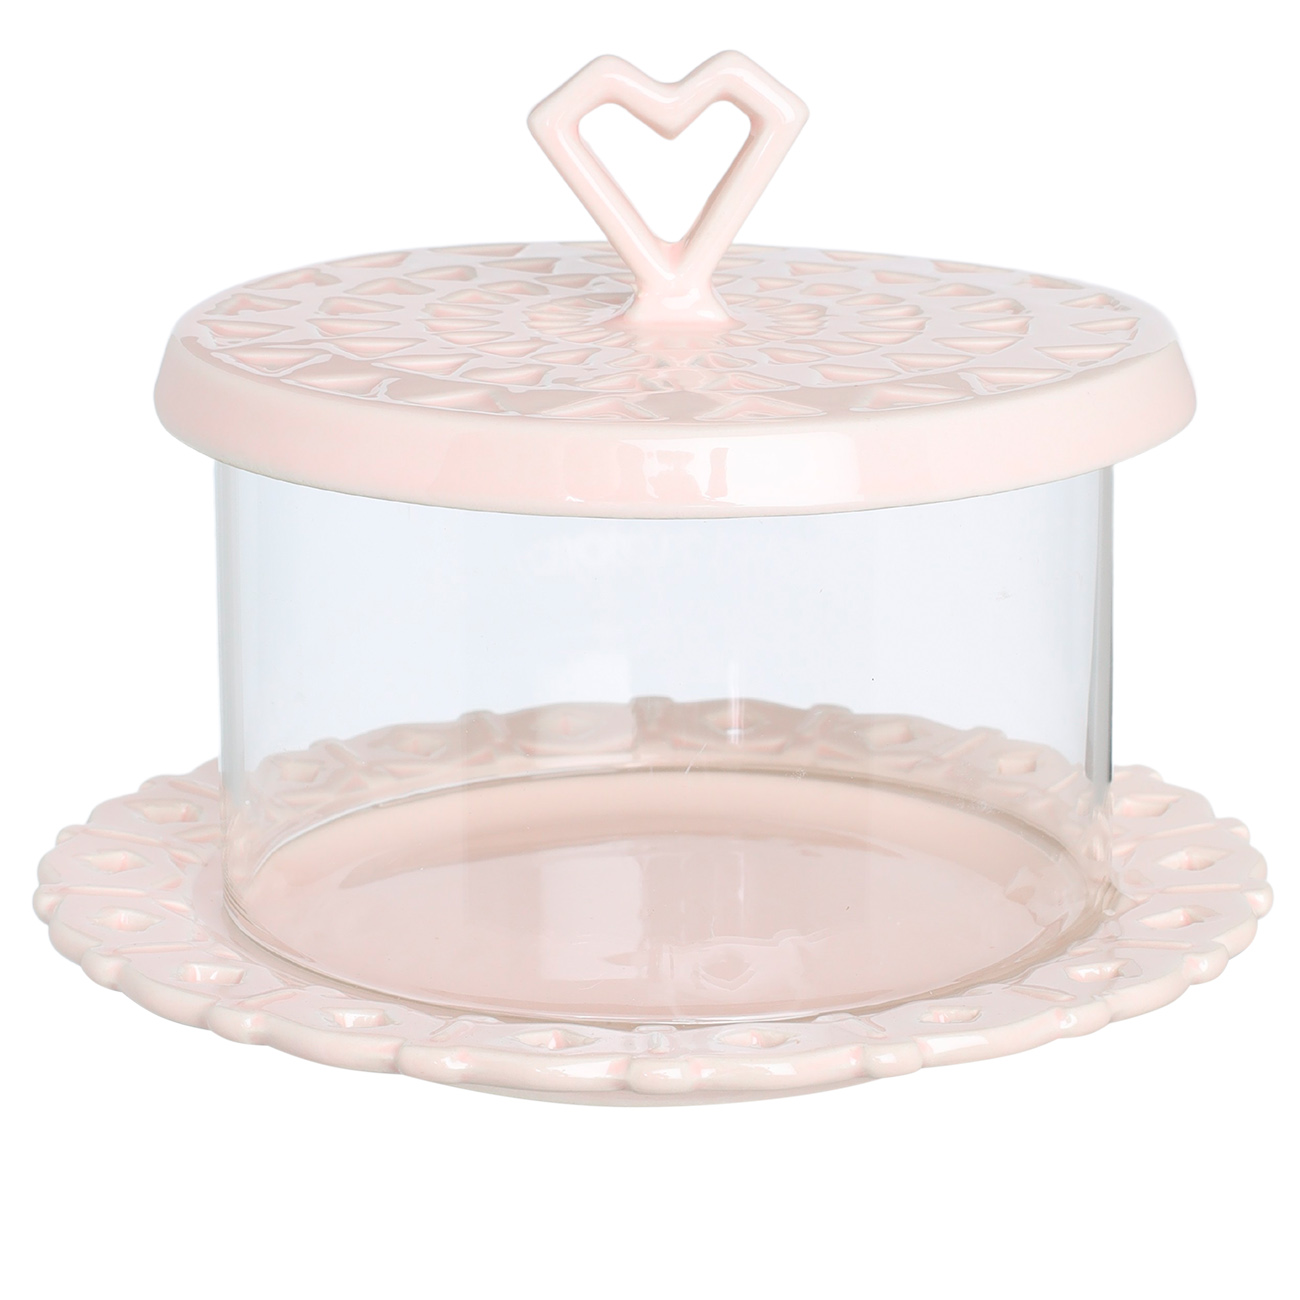 Тарелка десертная, 16 см, с куполом, керамика/стекло, розовая, Сердце, Pure heart - фото 1